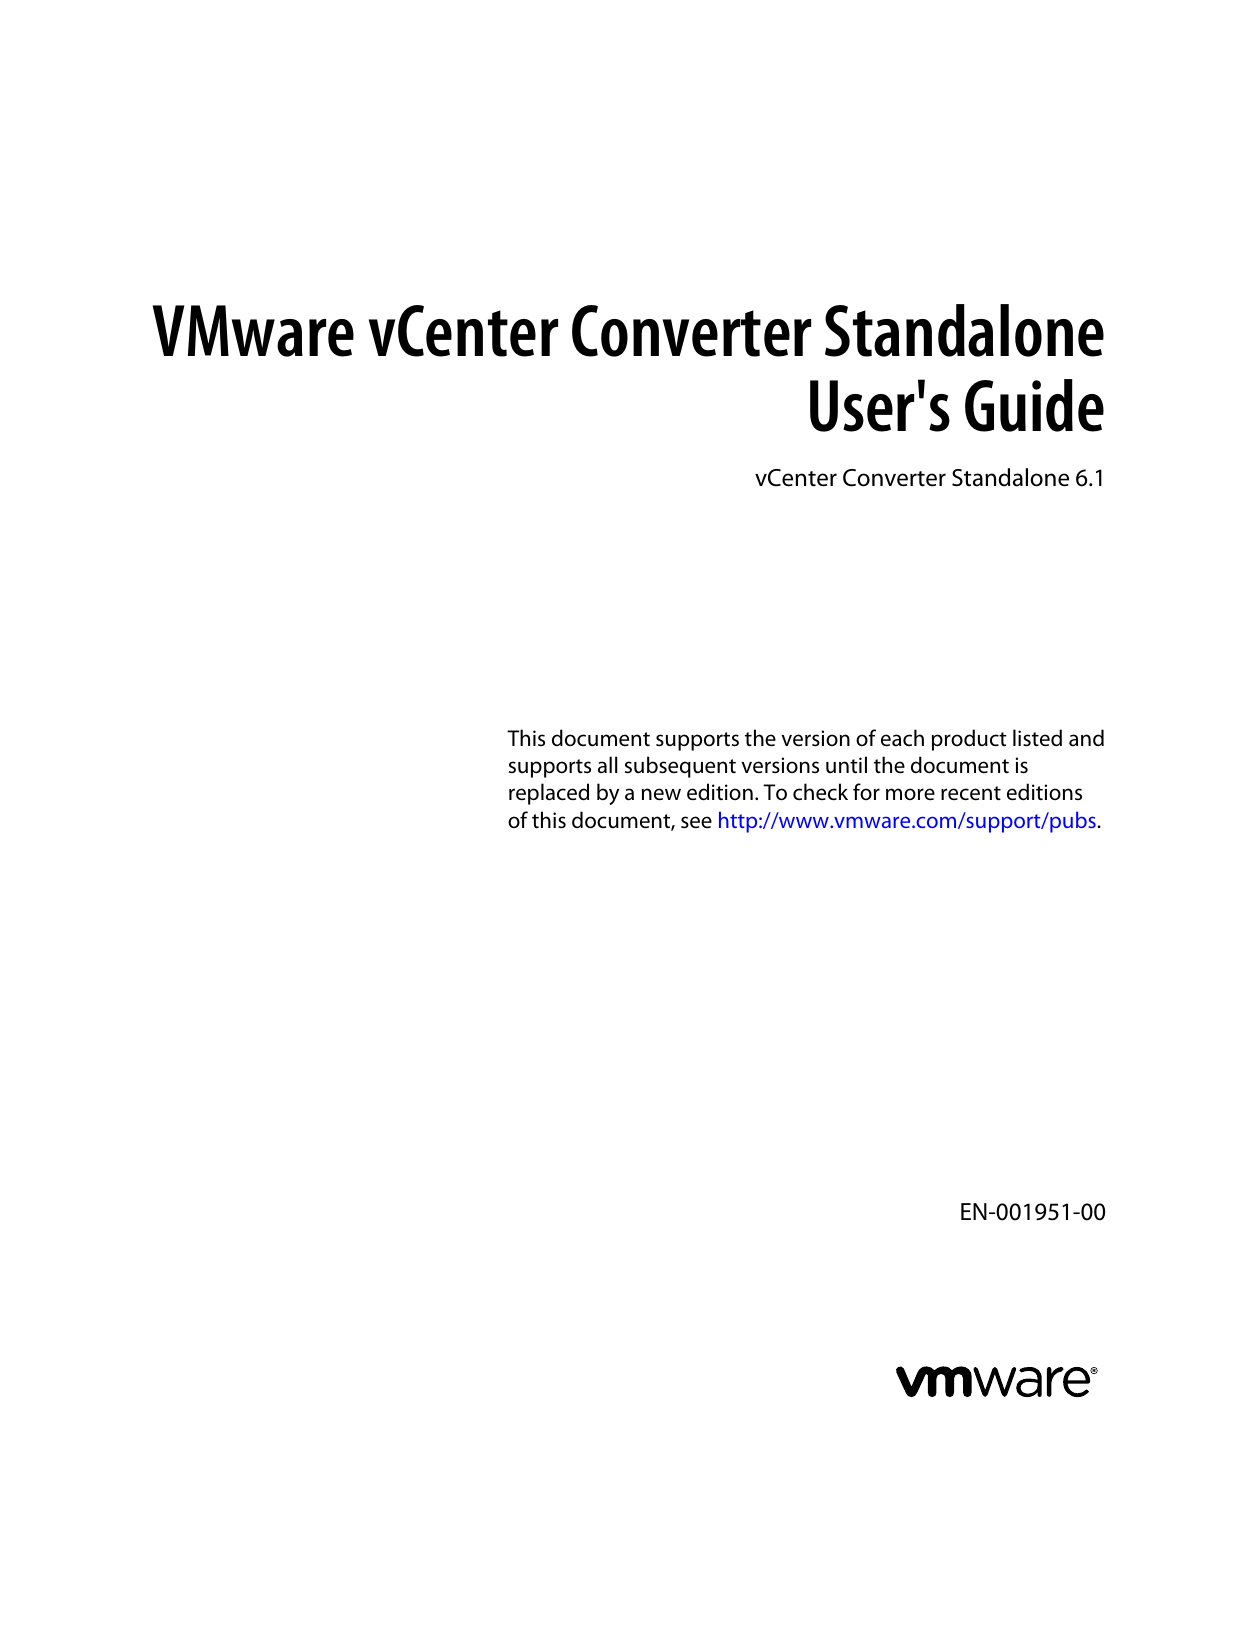 vcenter converter standalone 5.5 download